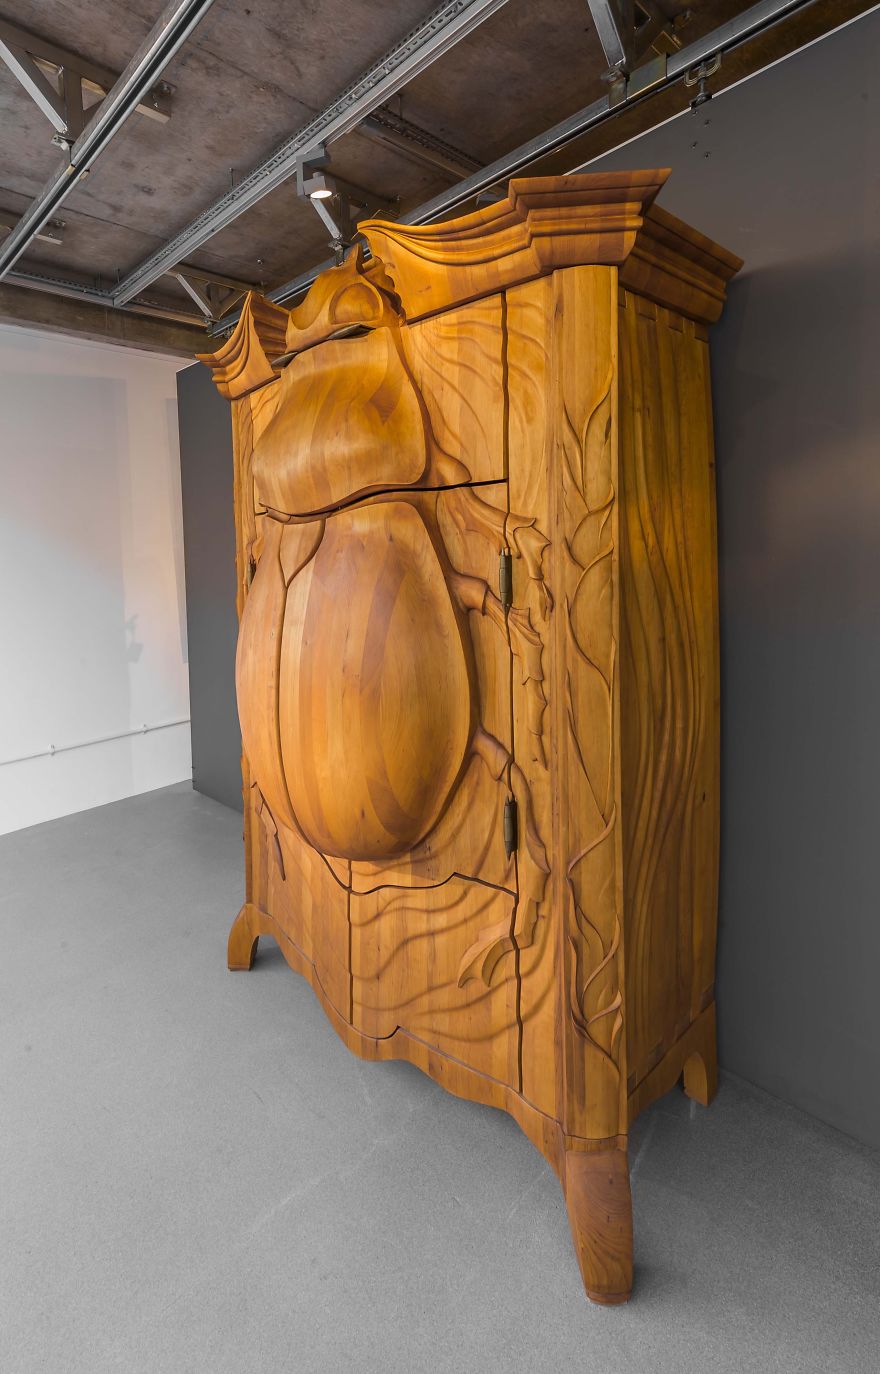 Latvian Artist Carves Wood Cabinet In Shape Of Giant Beetle